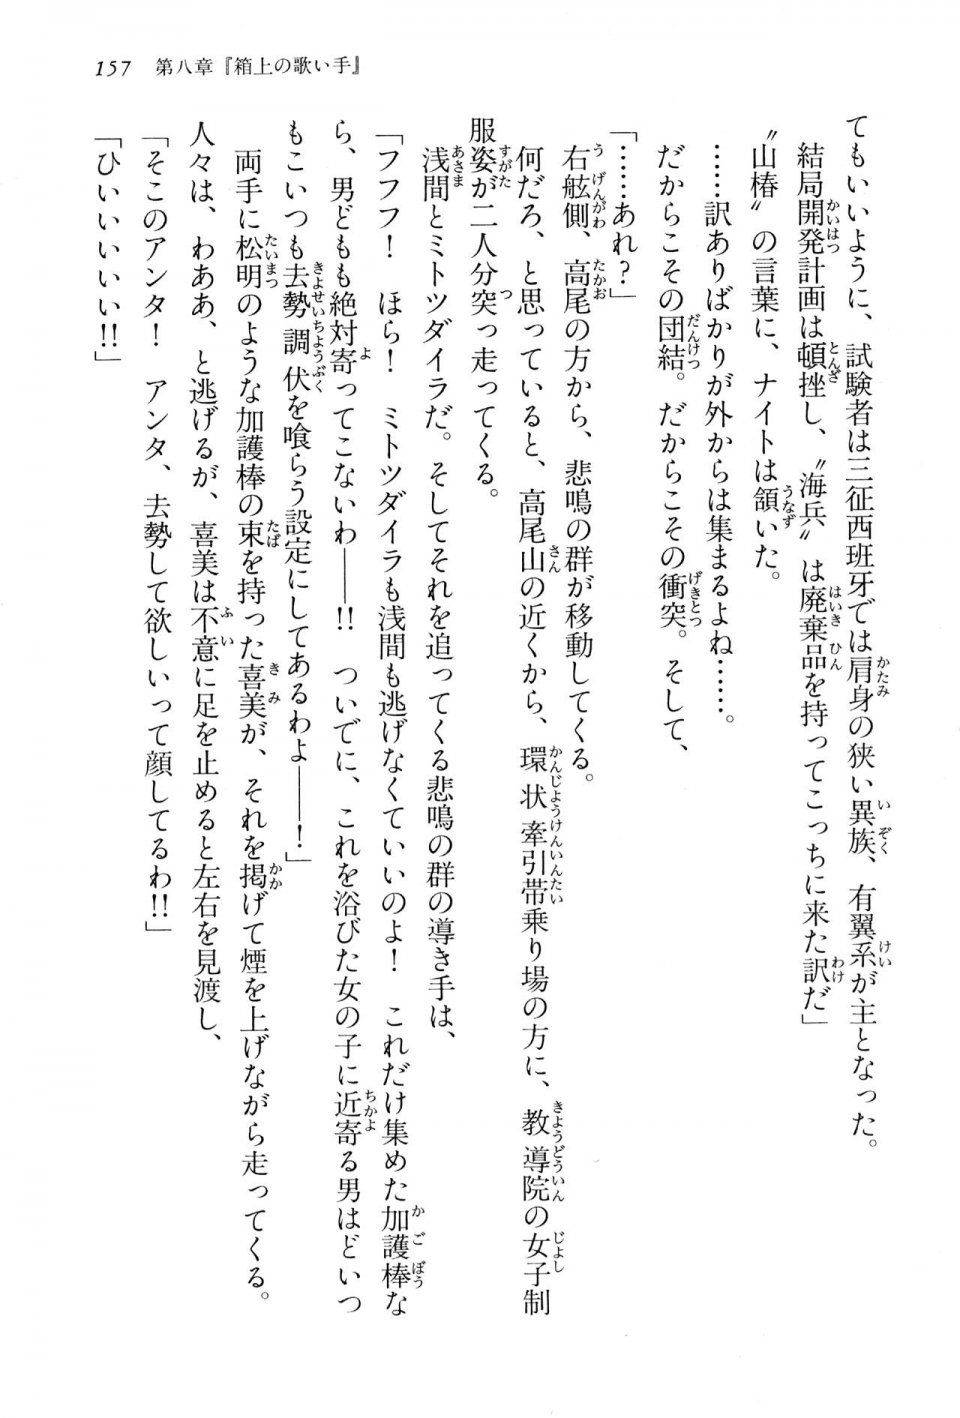 Kyoukai Senjou no Horizon BD Special Mininovel Vol 2(1B) - Photo #161